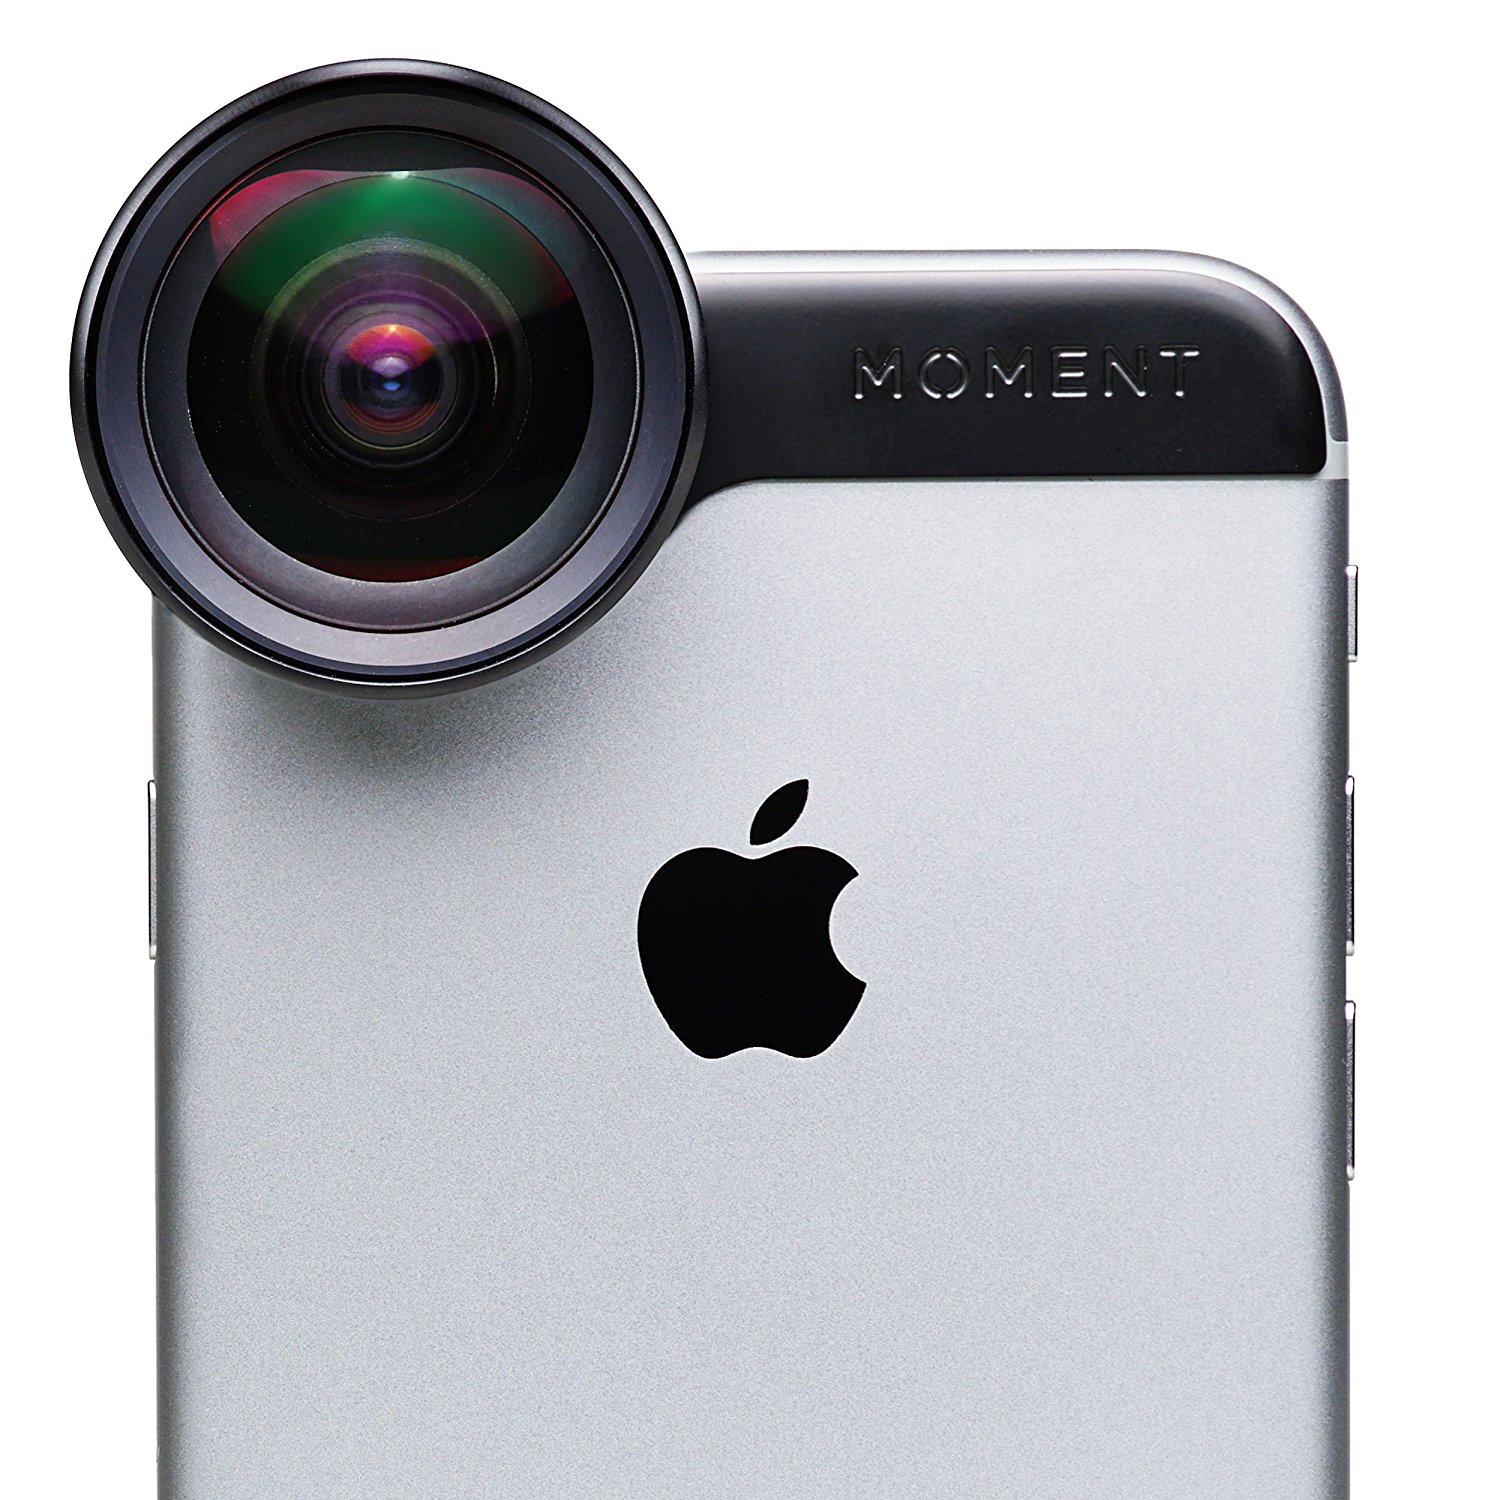 Amazon.com: MOMENT Original Wide iPhone 6 Lens - 18mm Wide Angle ...